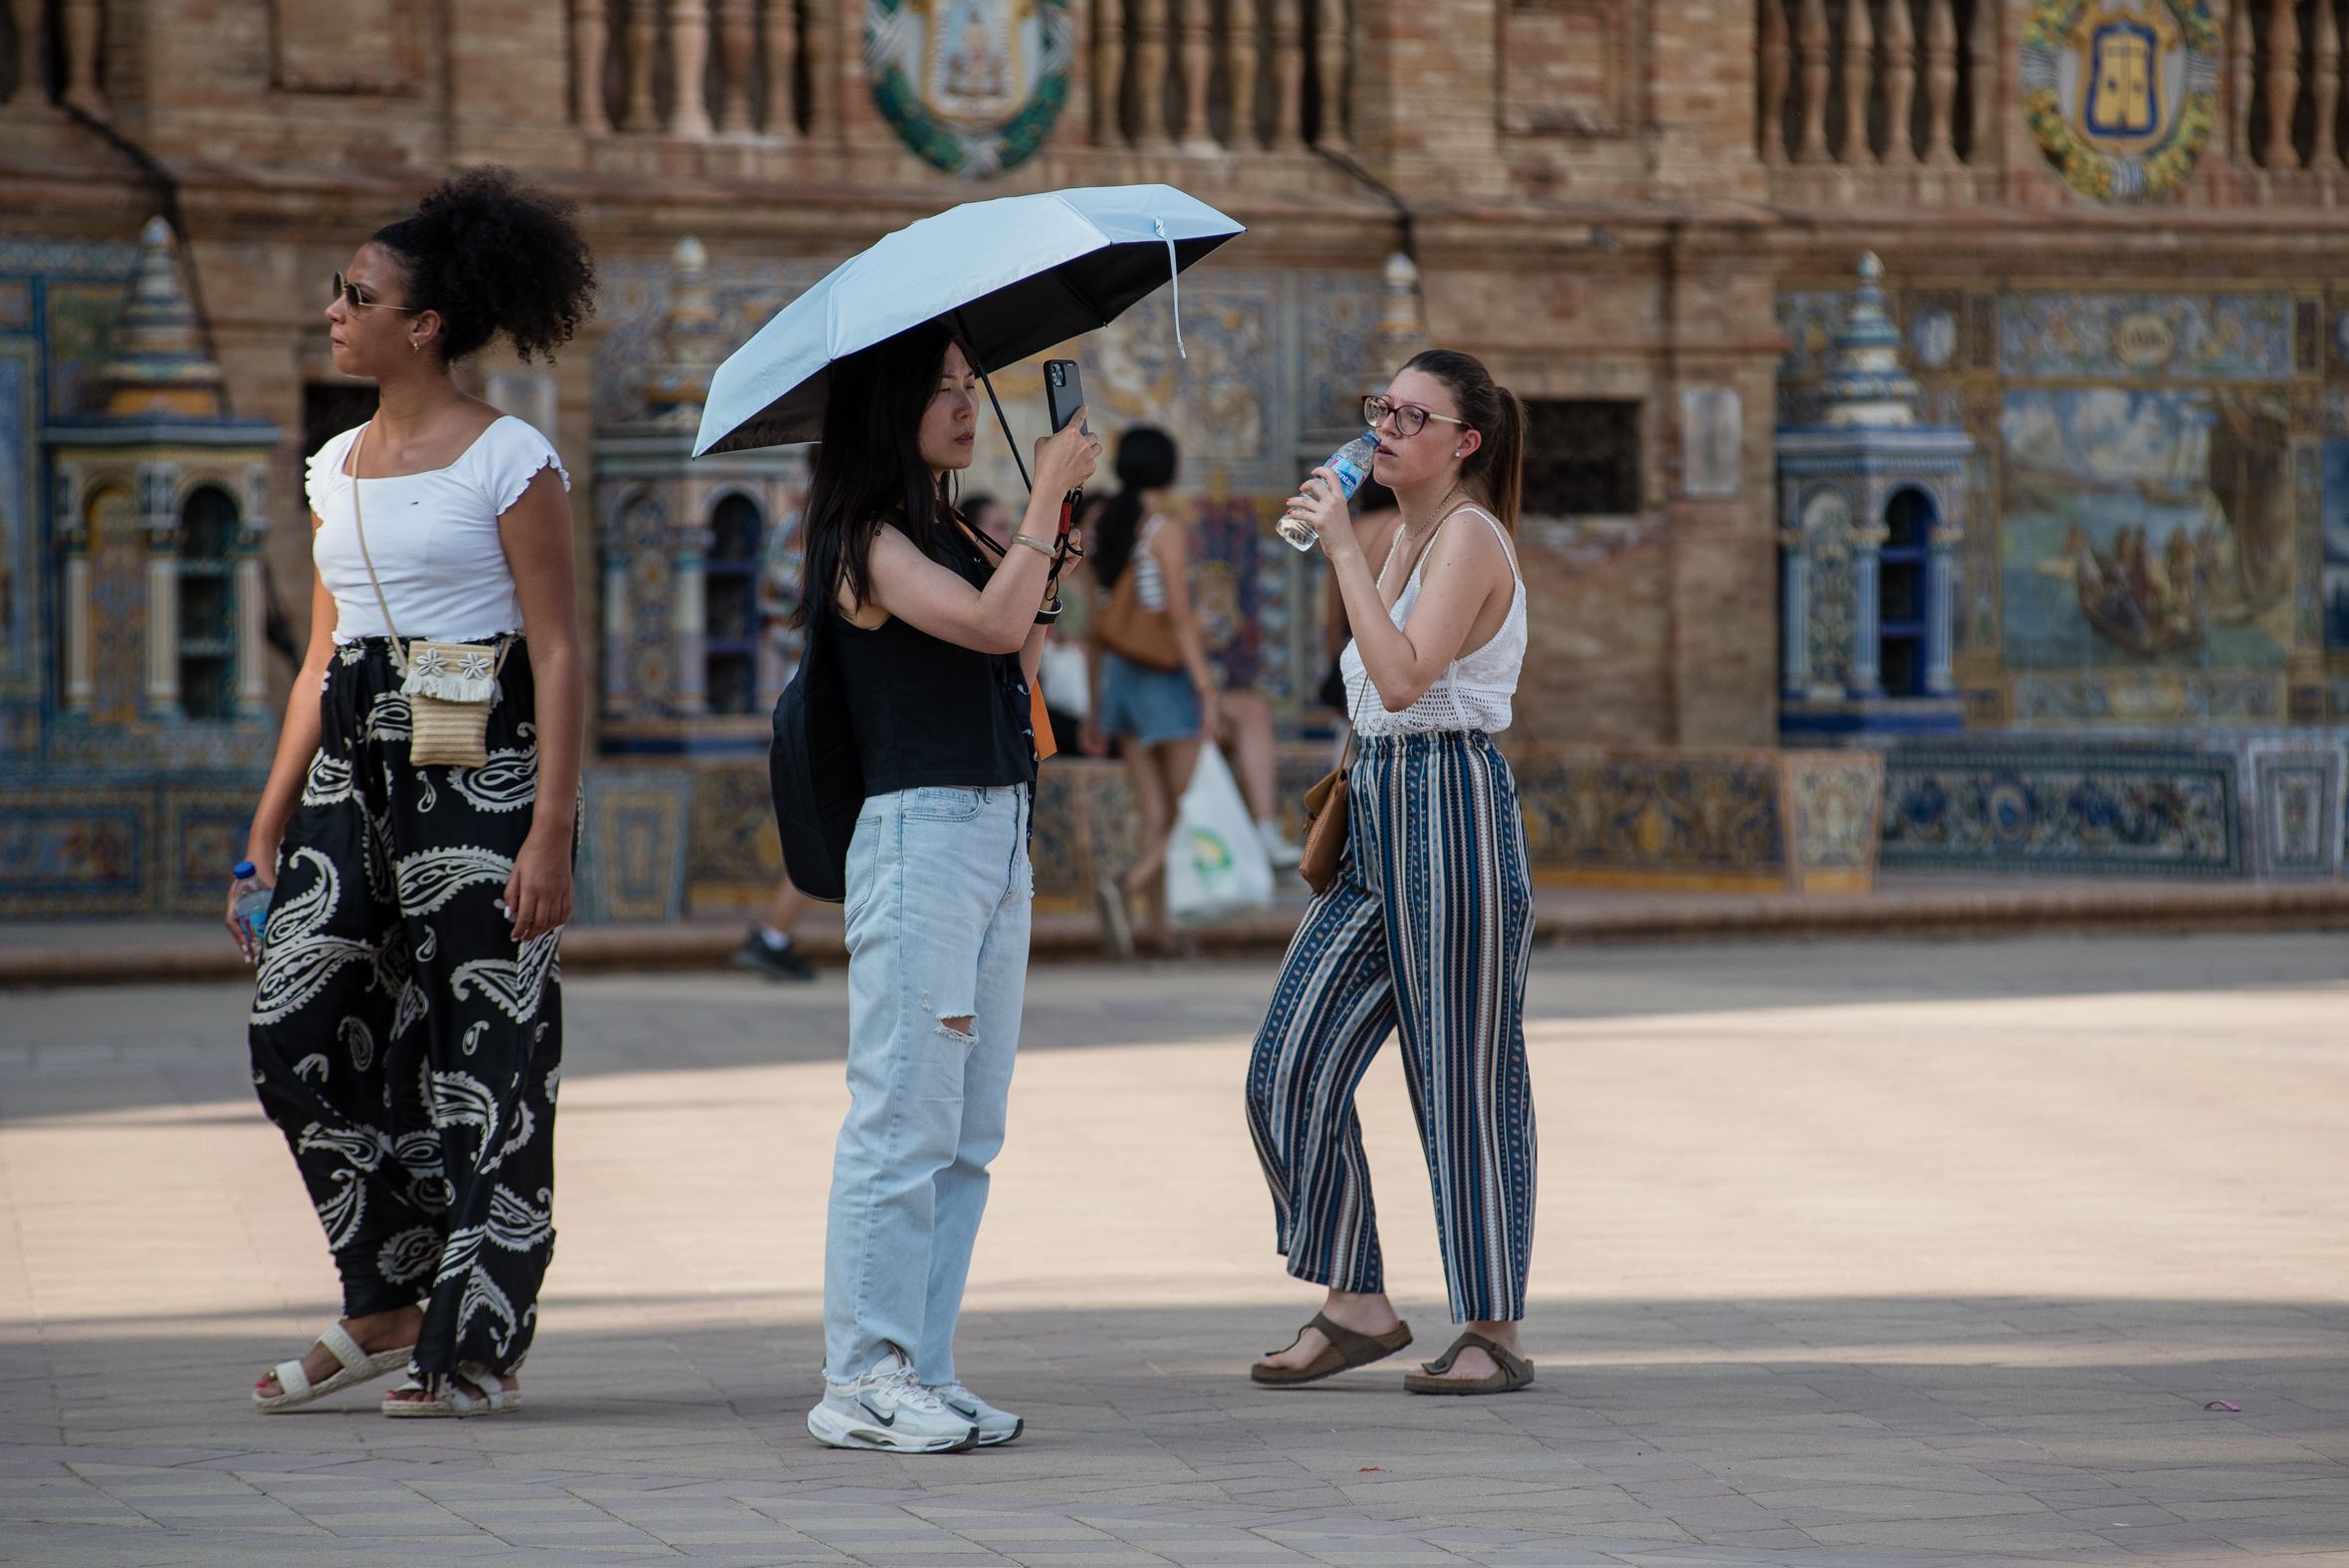 Ola de calor en la plaza de España en Sevilla. 